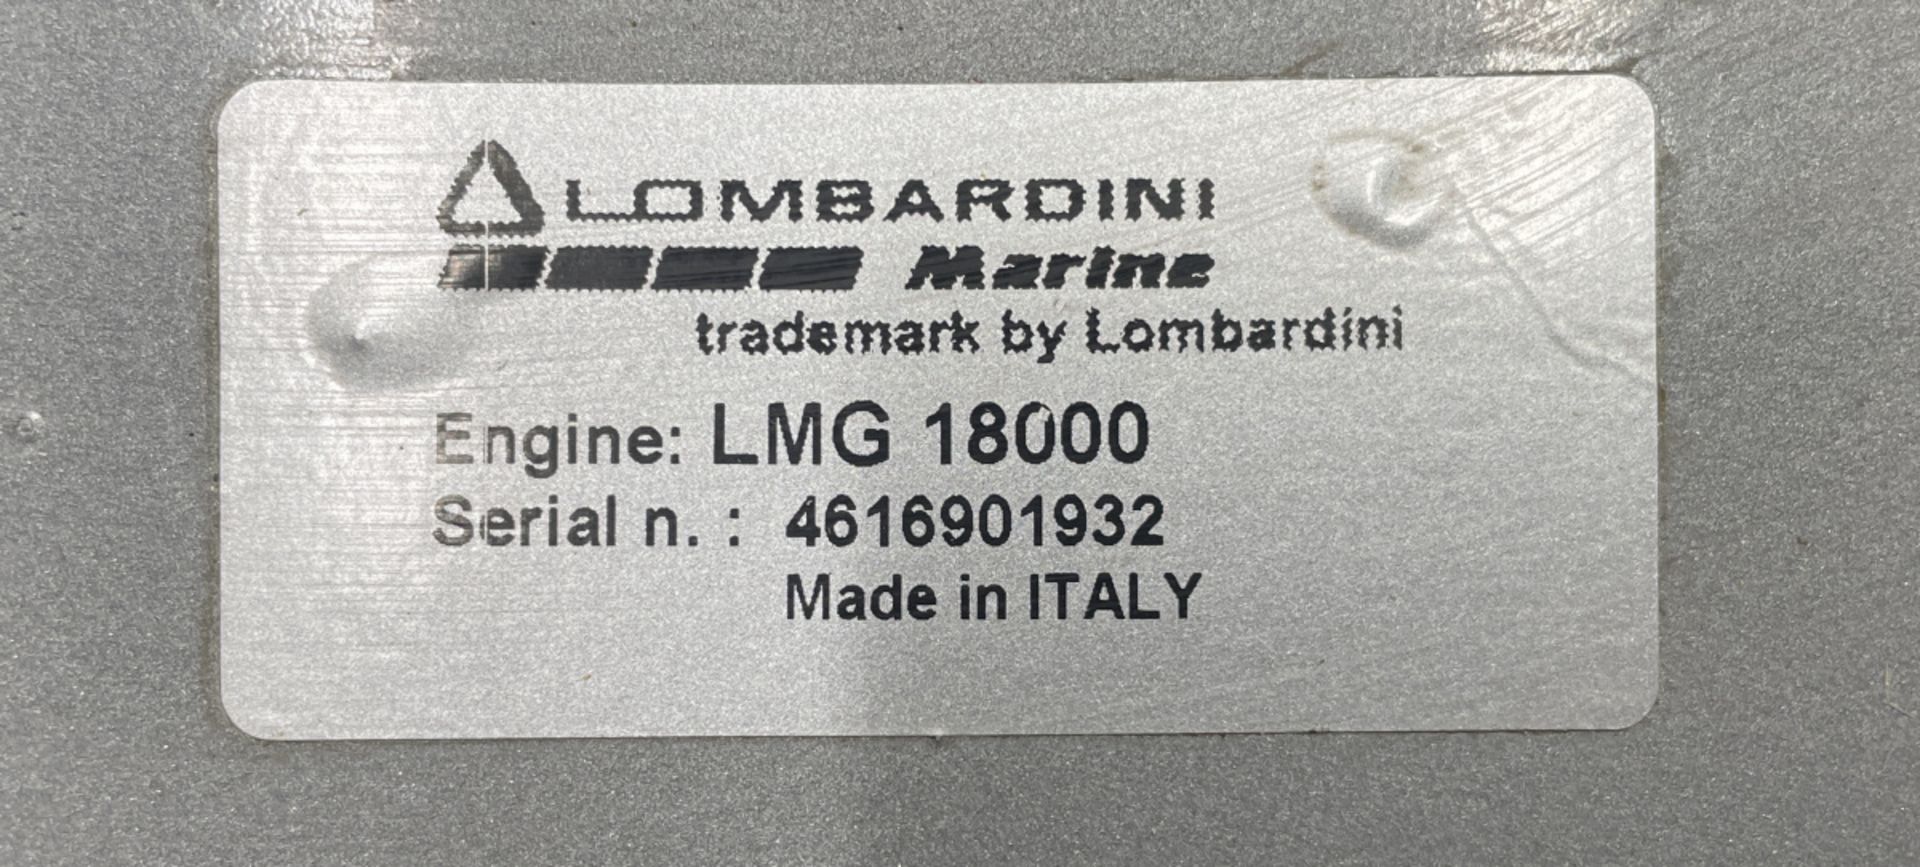 Lombardini Marine diesel generator equipped with marine engine FOCS series: LMG 18000 - Bild 6 aus 22